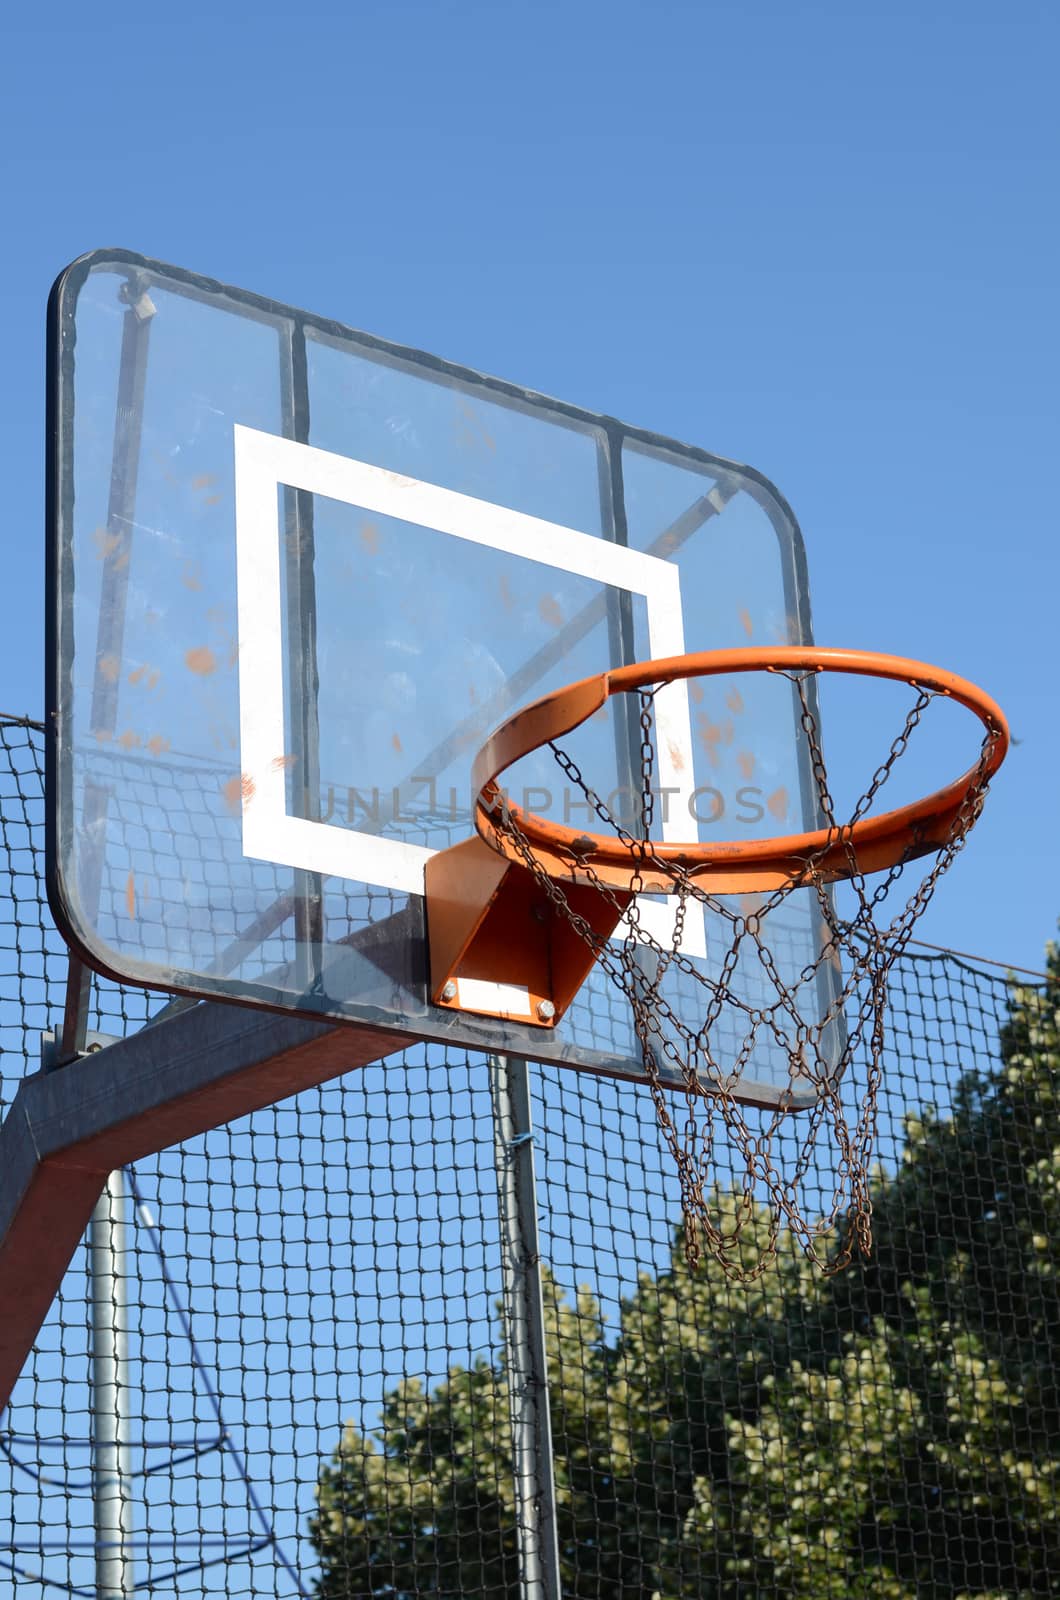 Basketball basket by sarkao